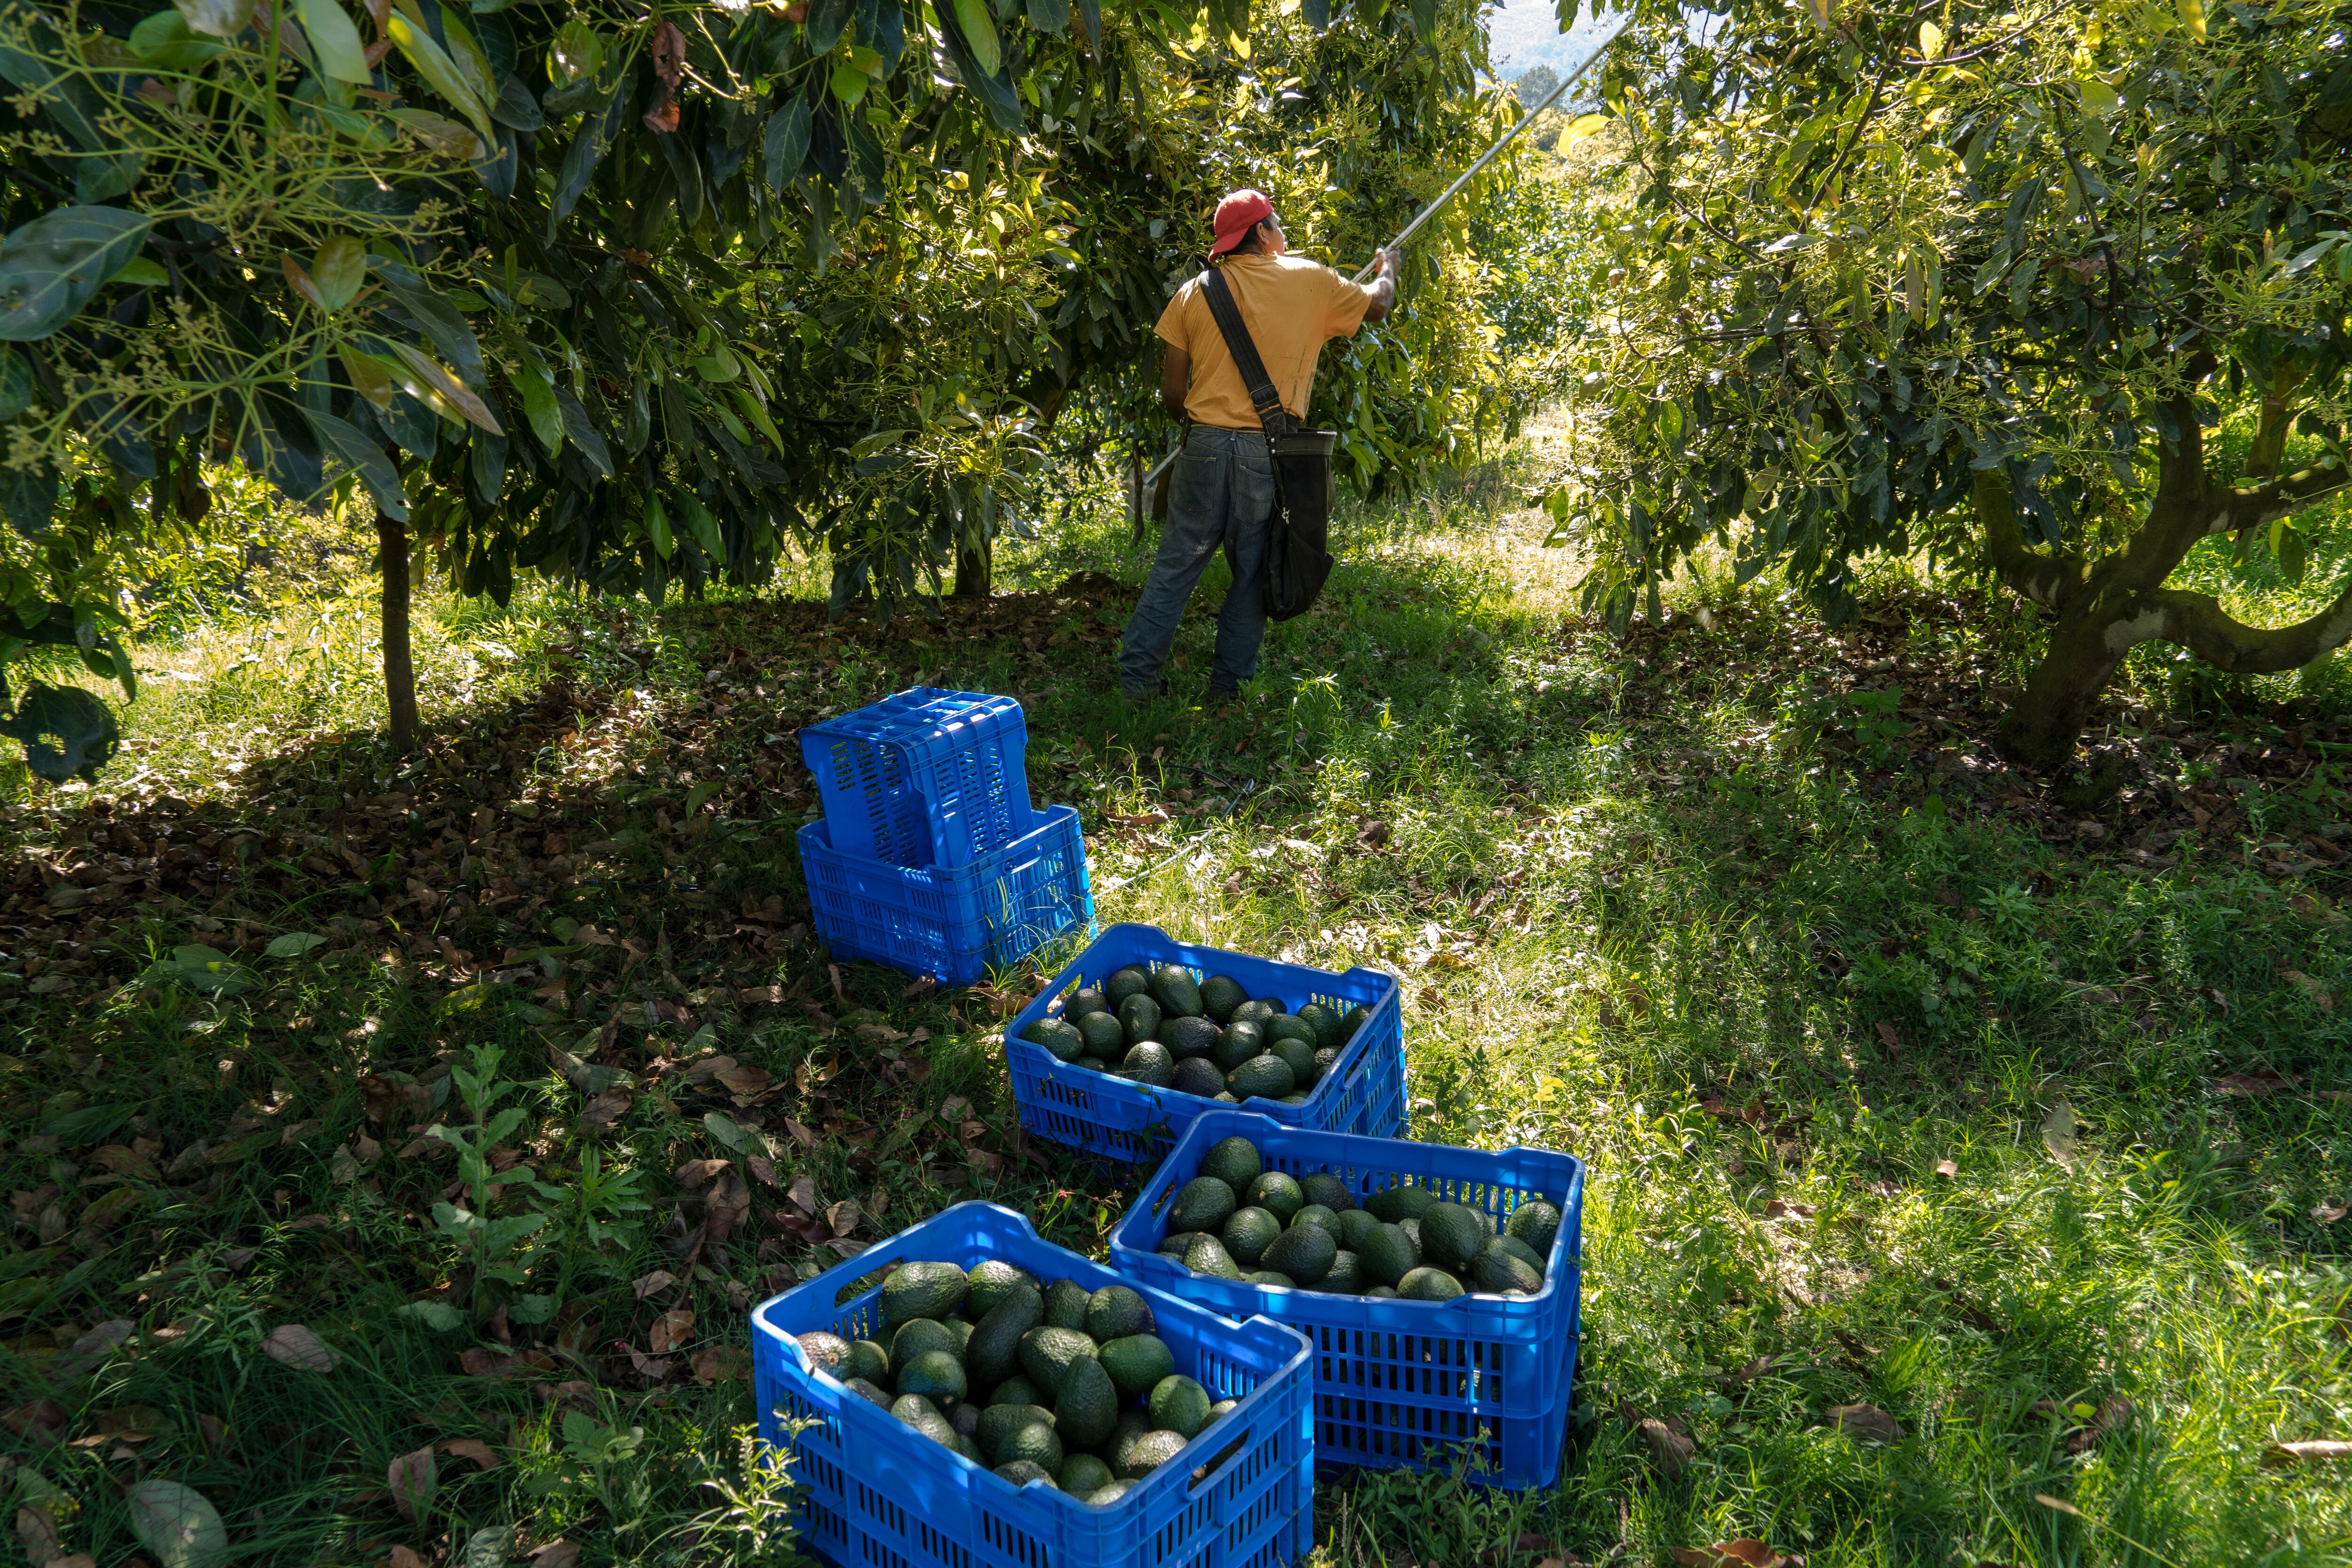 Harvesting avocados in Michoacán, Mexico; January 2019.